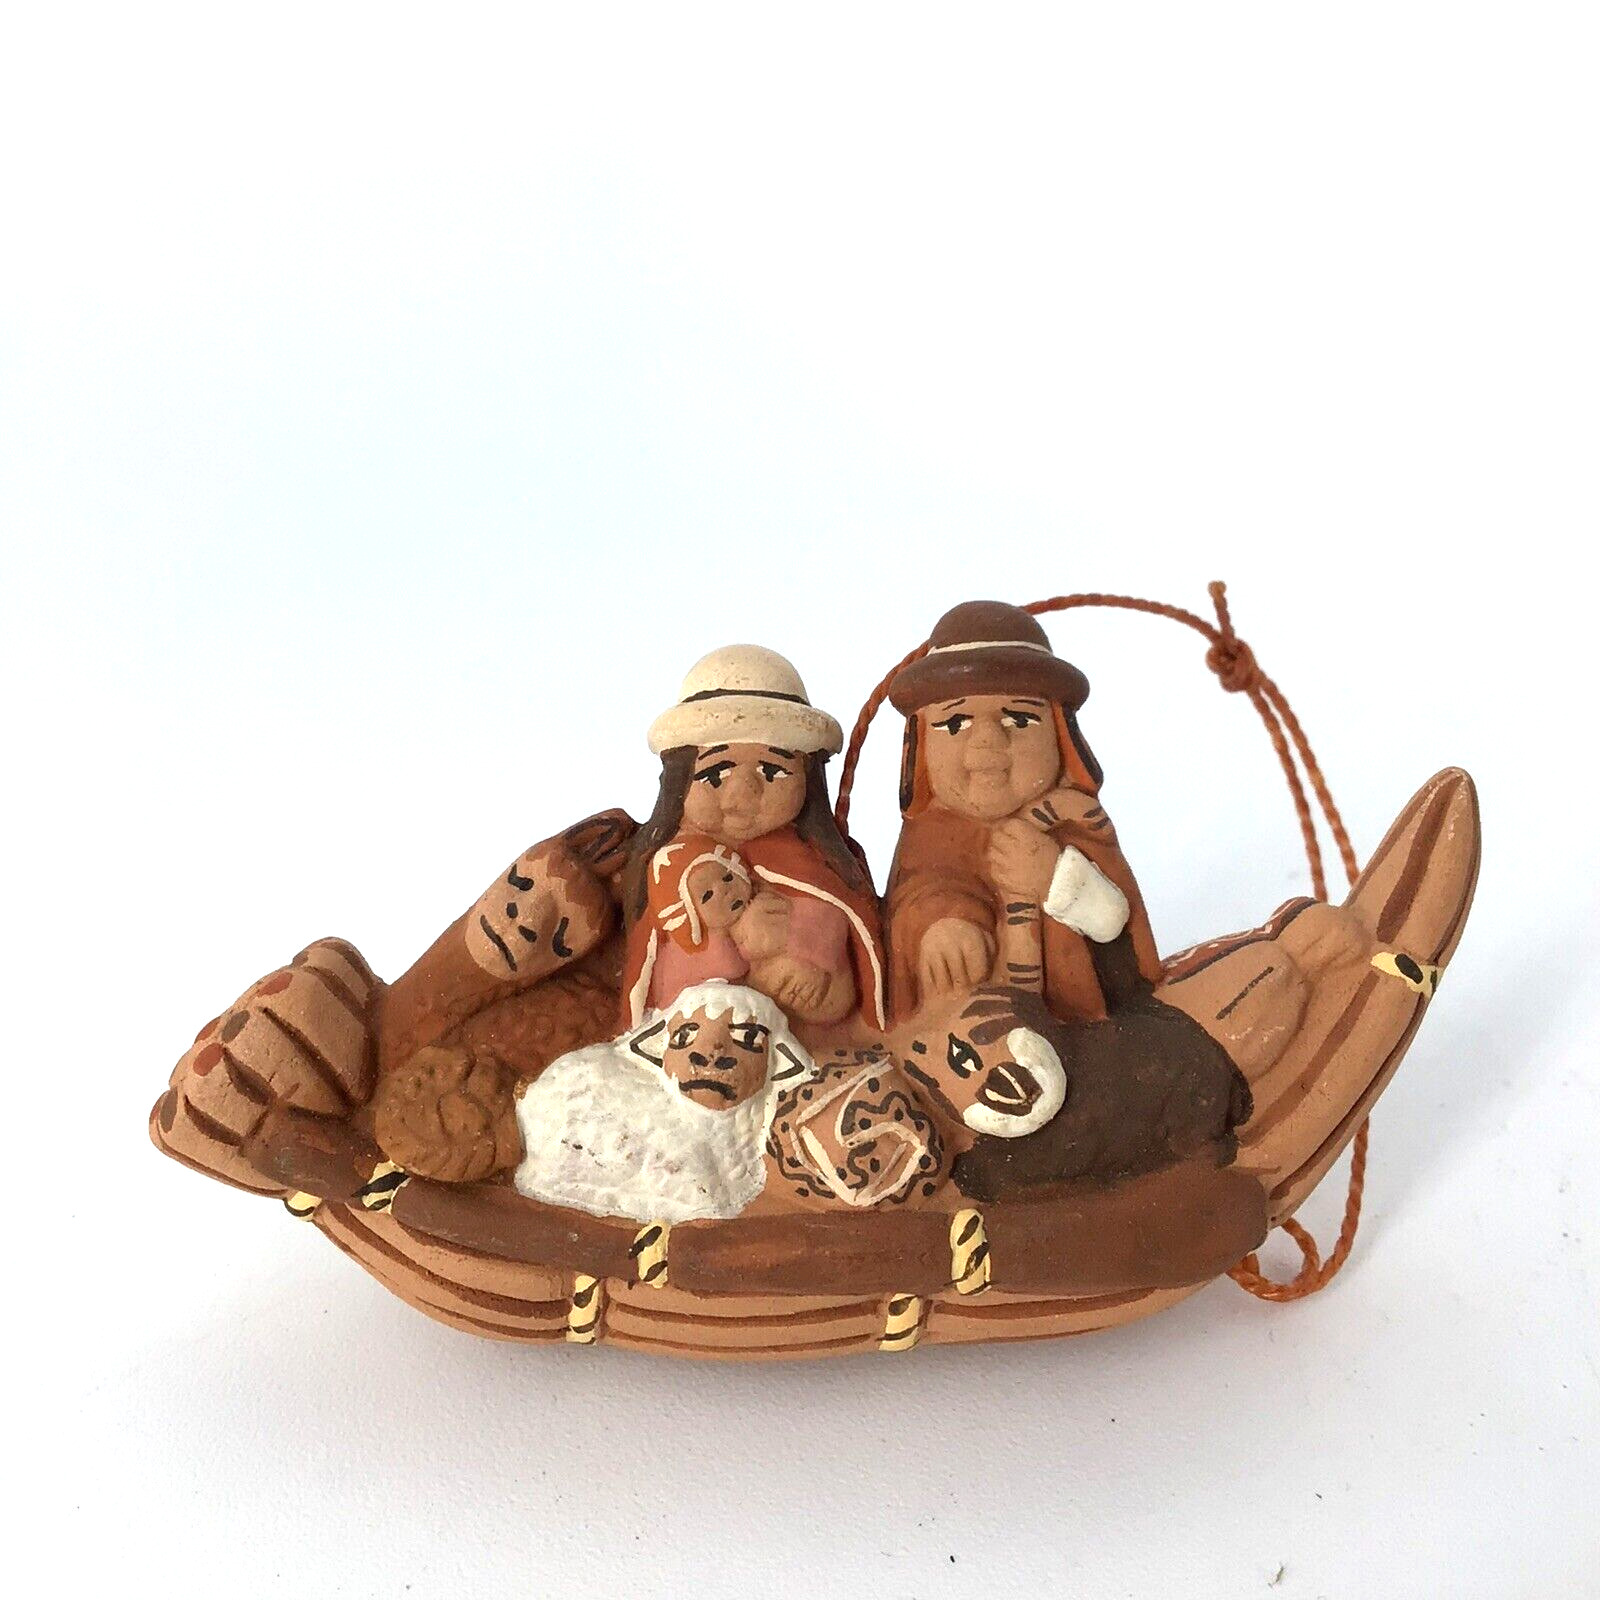 Peruvian Nativity Ornament Clay Hand Painted Miniature W/ Llama on Reed Boat